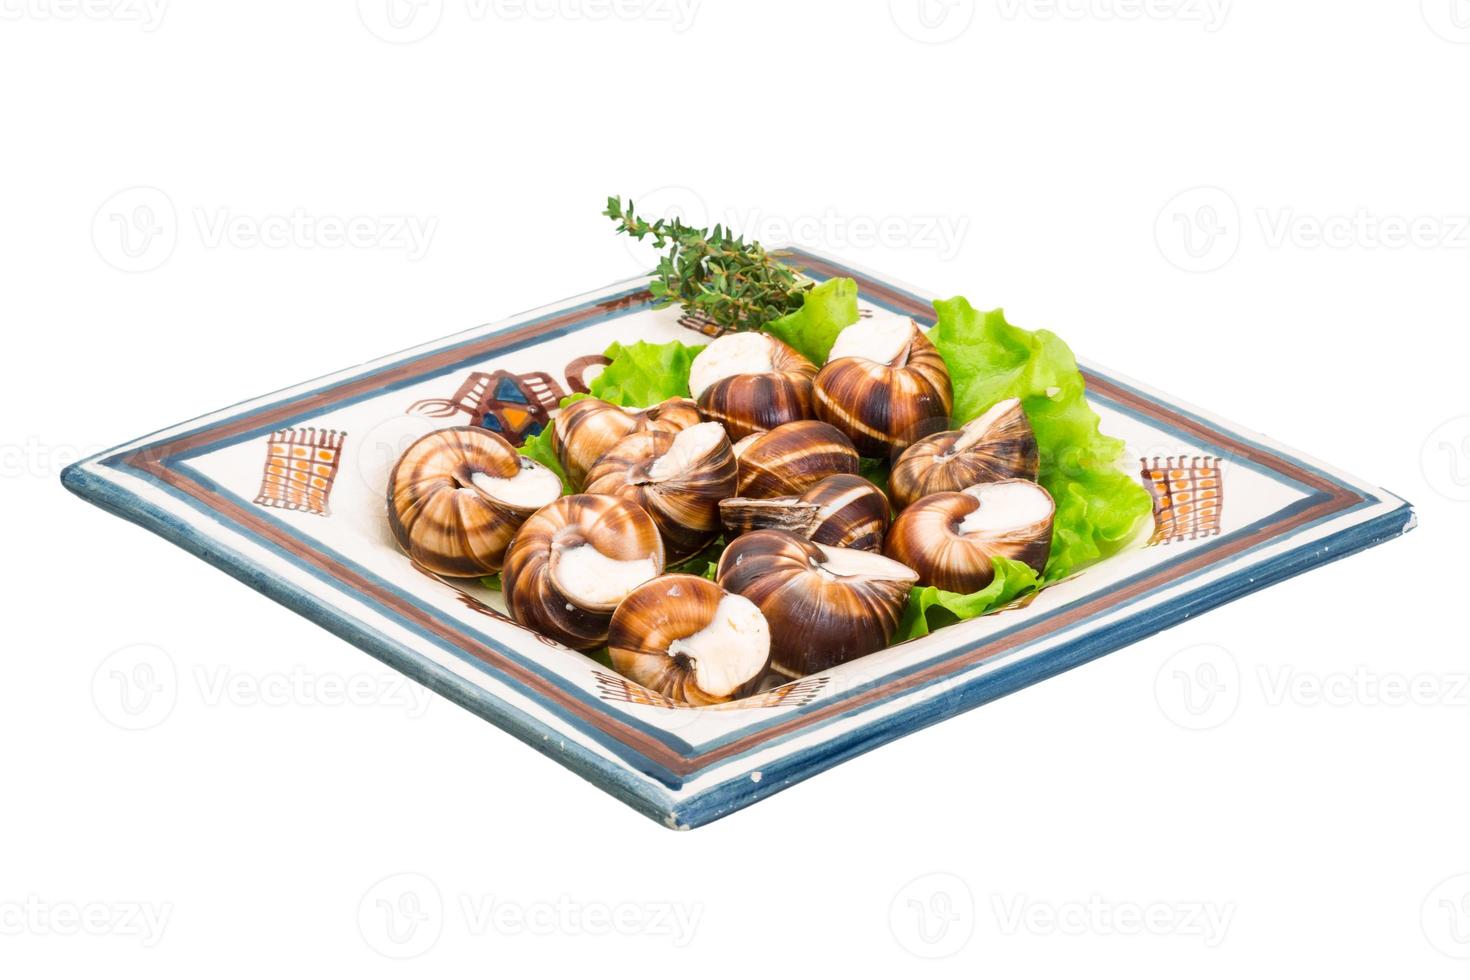 escargotslakken op een bord foto